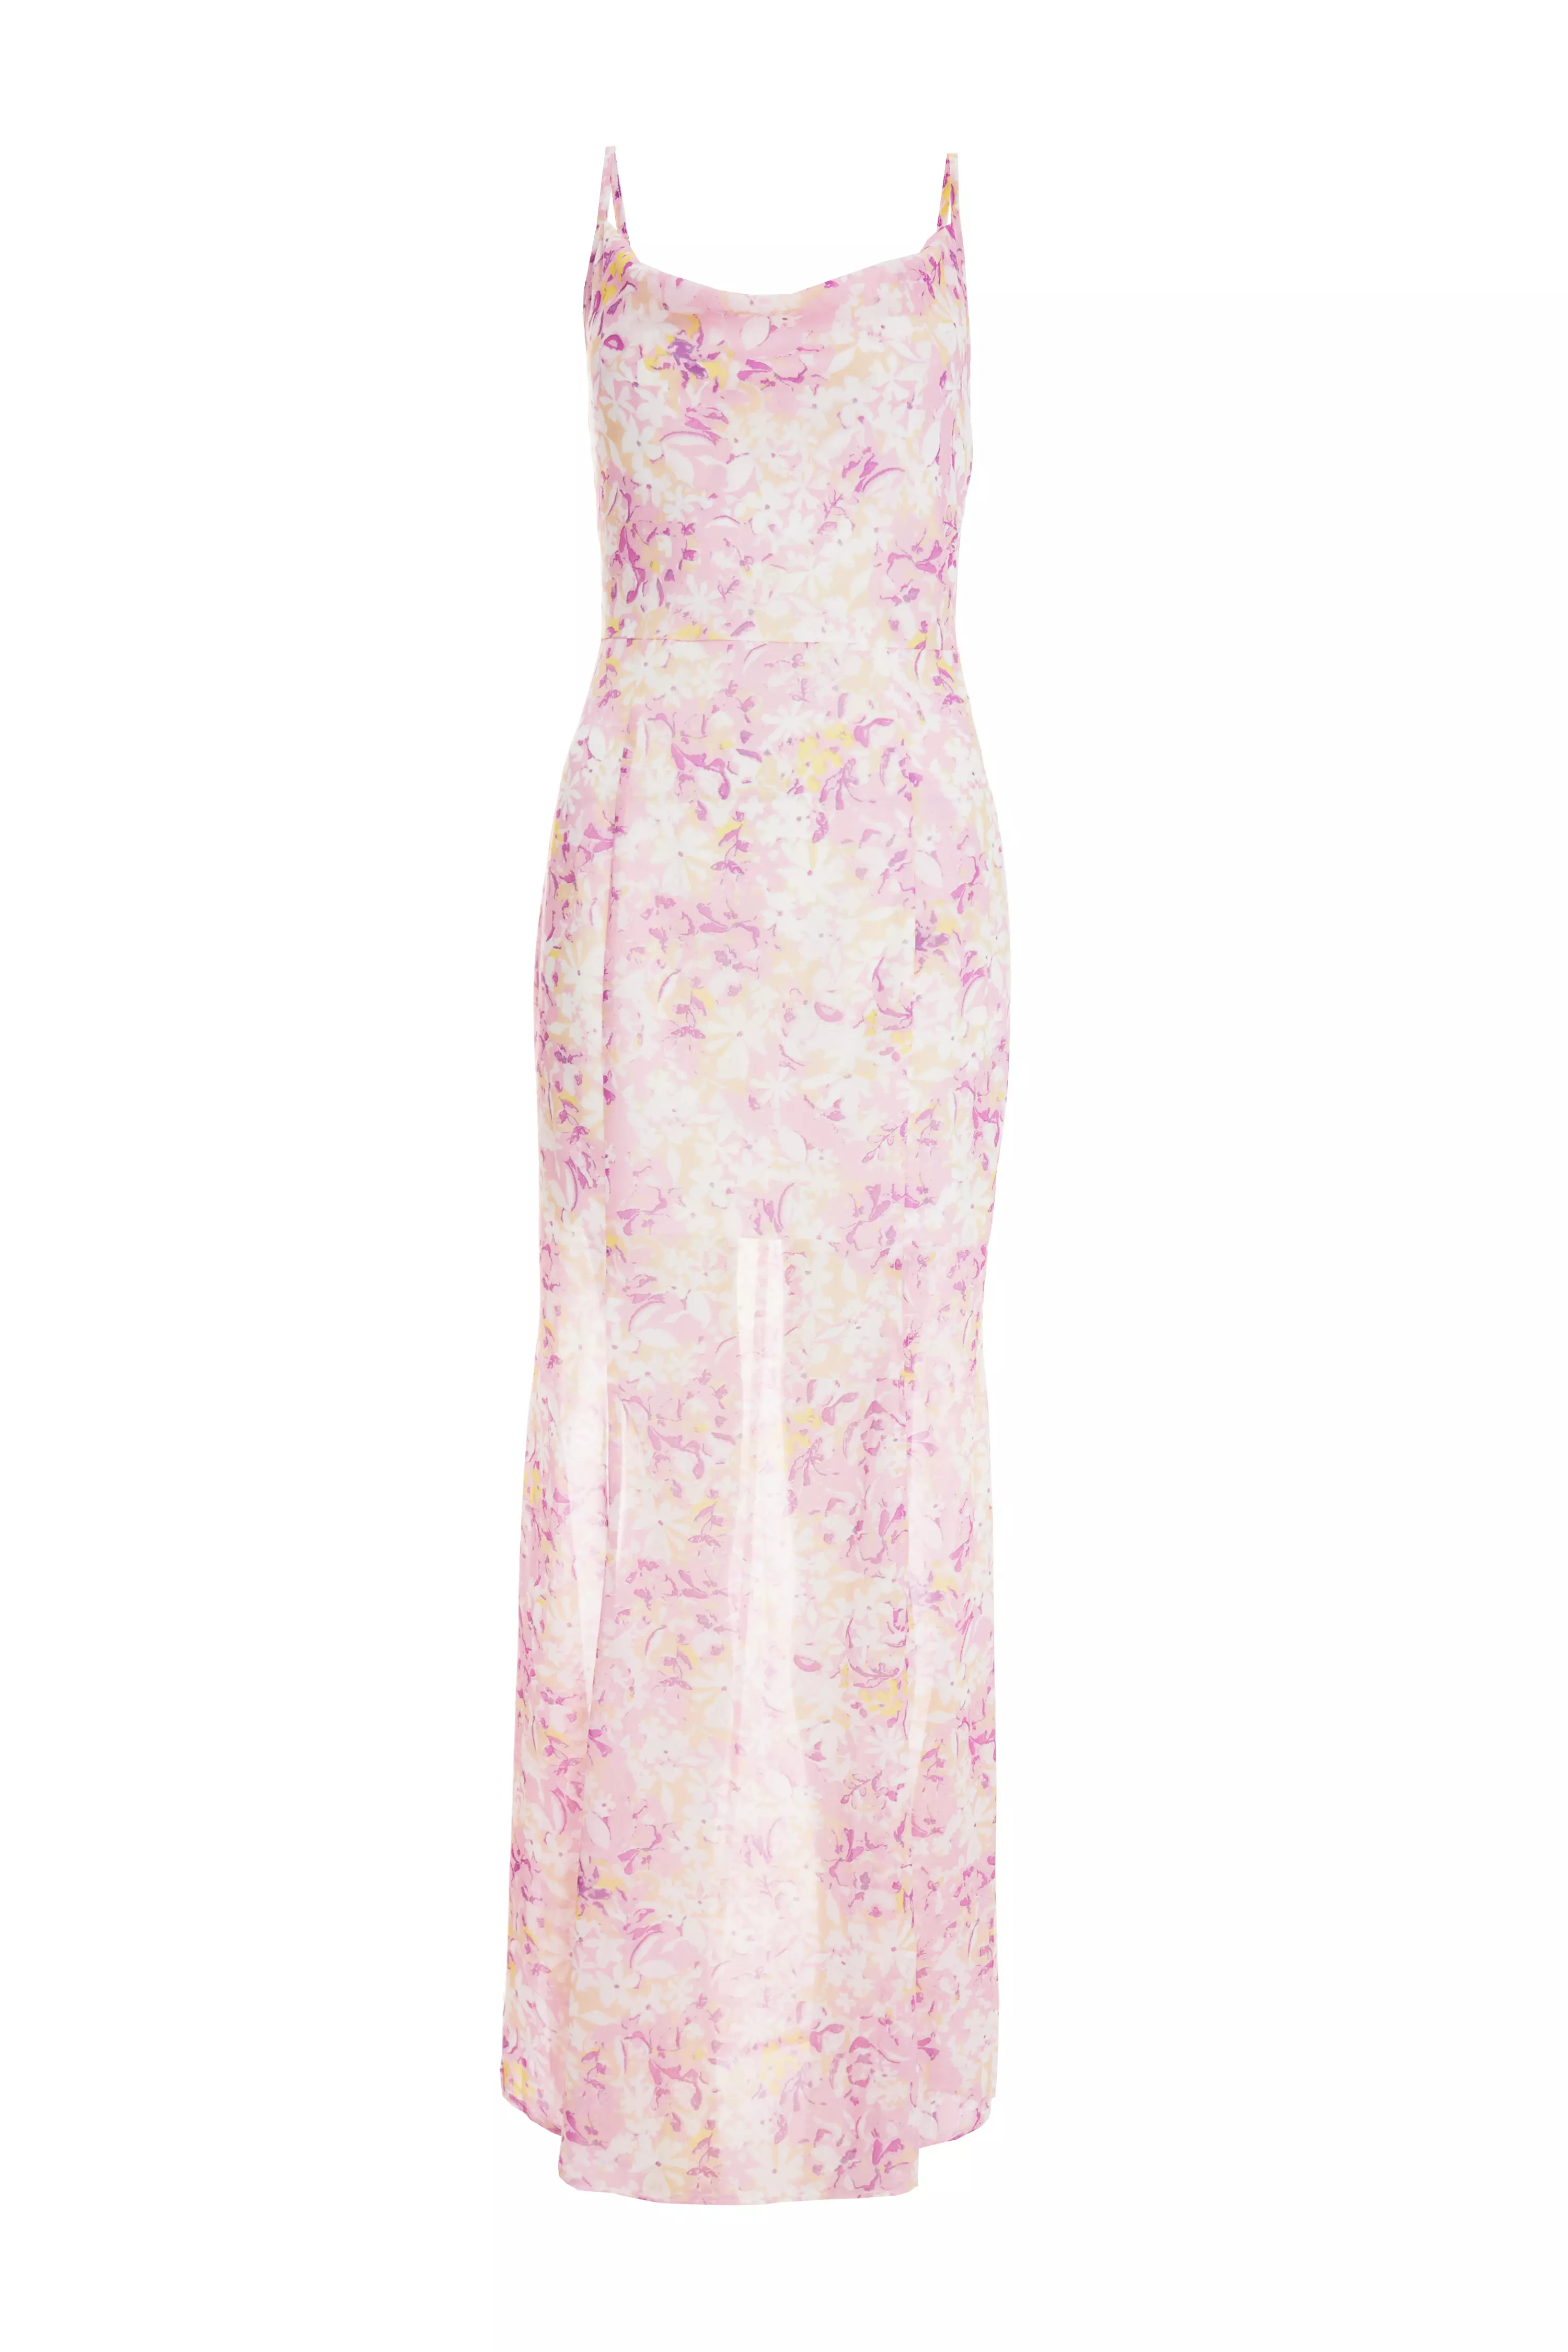 Pink Floral Mesh Maxi Dress - QUIZ Clothing